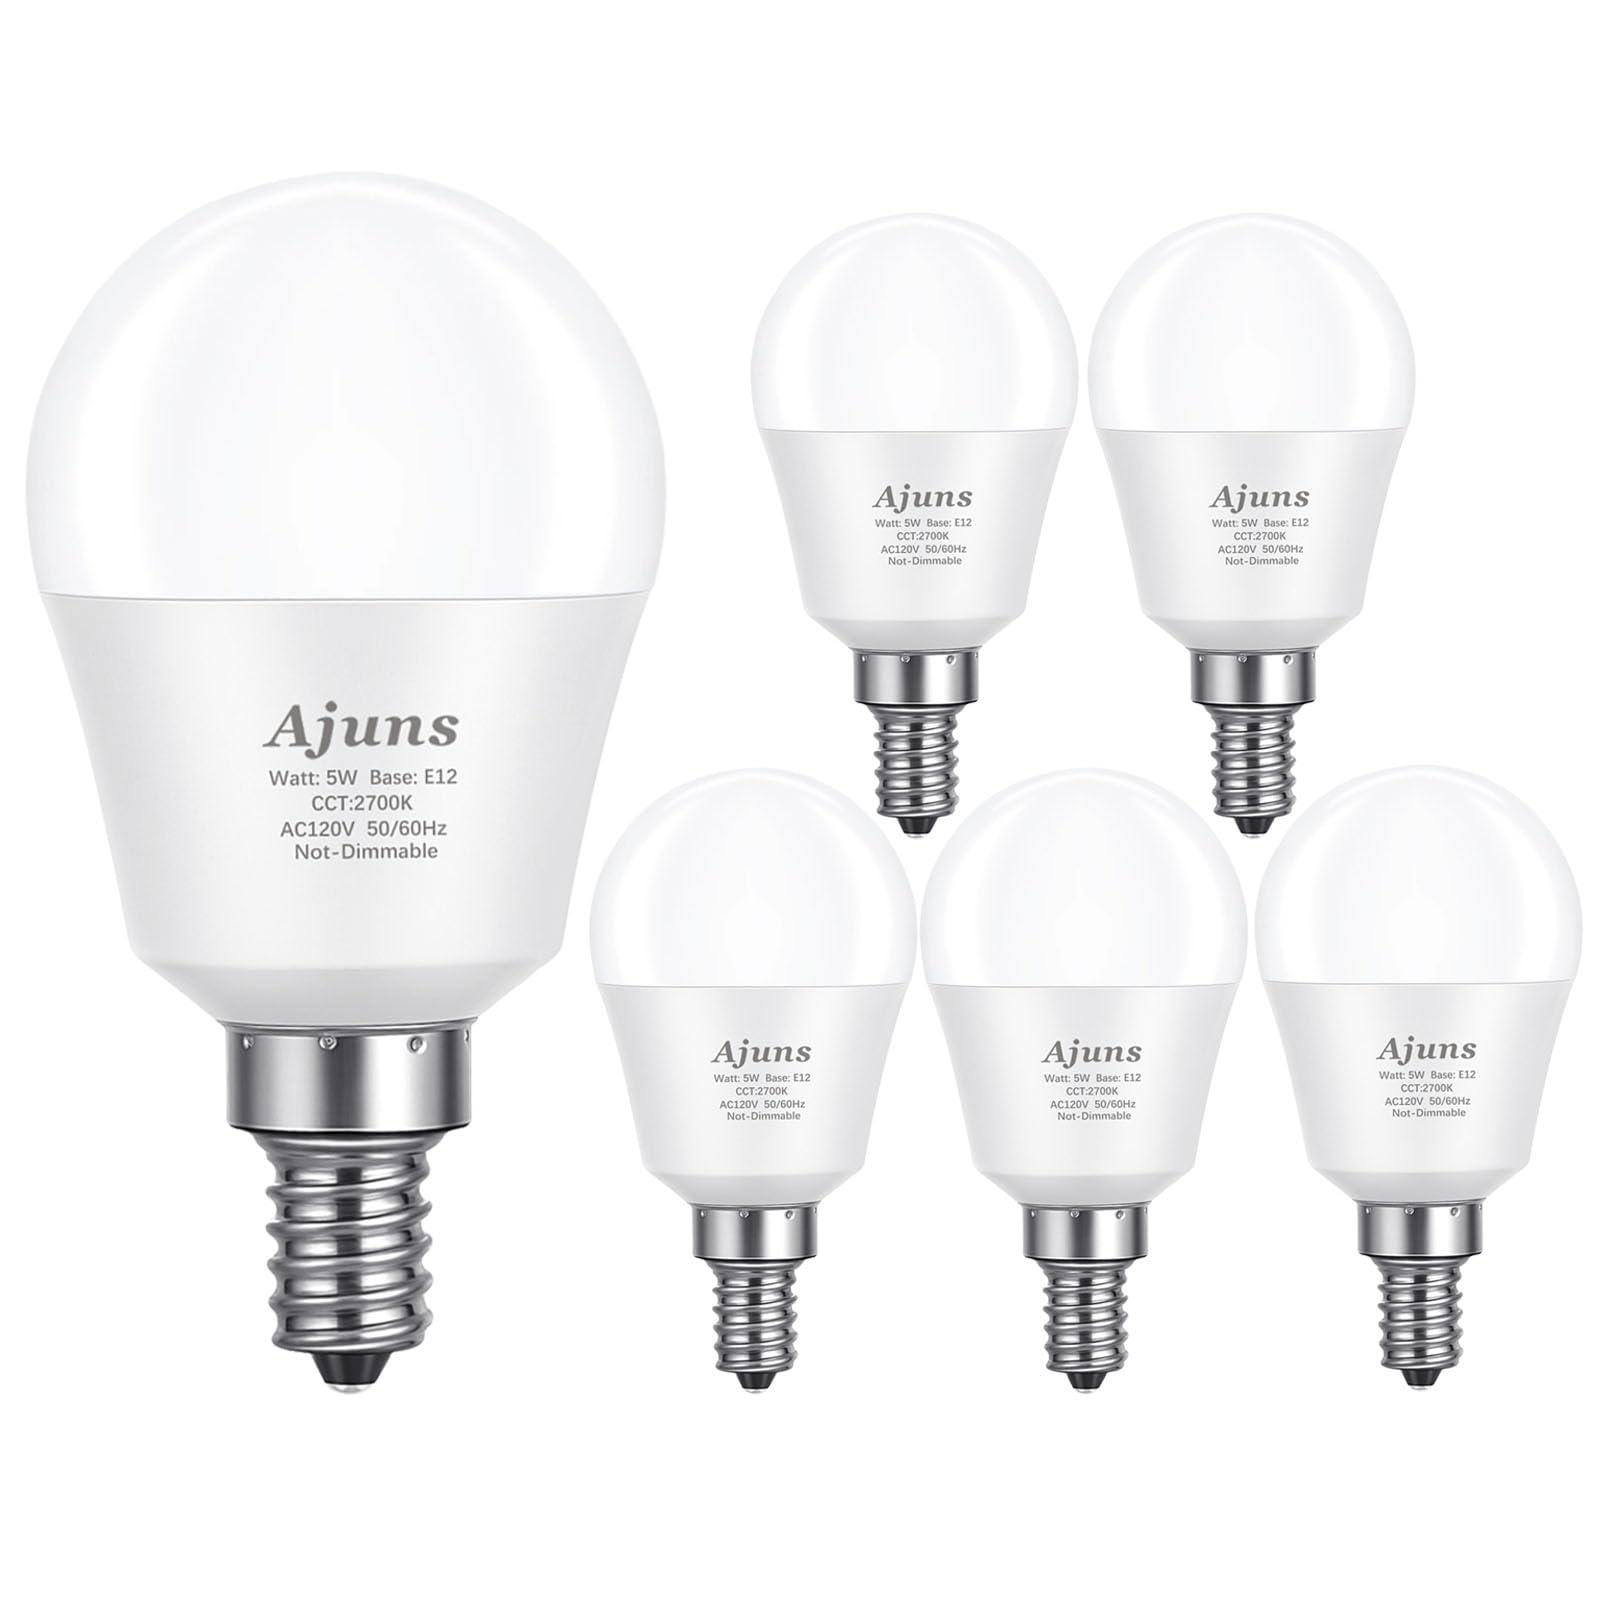 Ajuns 5Watt (40W Equivalent) LED Bulbs, E12 Small Base Ceiling Fan Light Bulbs,450 Lumen,Warm White 2700K, 120V A15 LED Bulb Glo